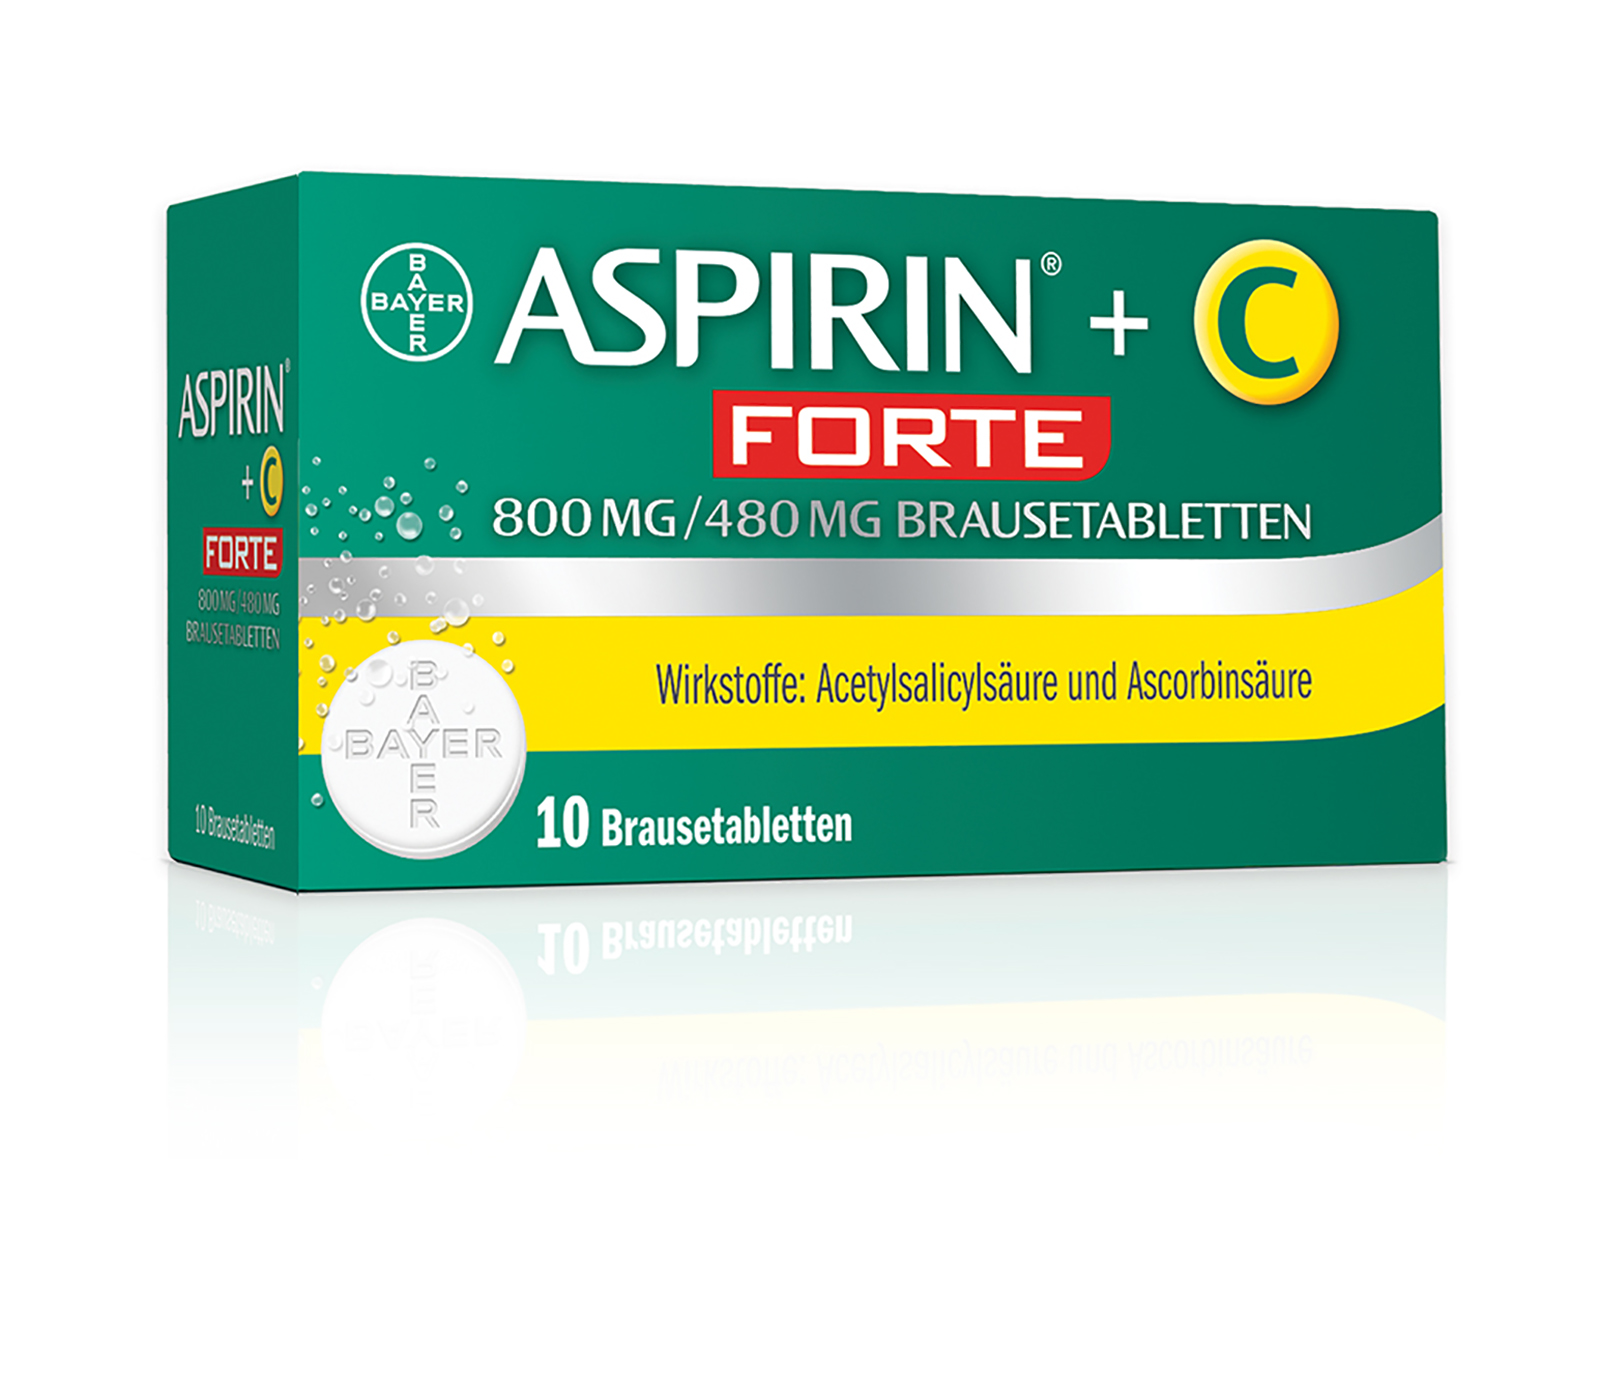 Aspirin+C forte 800 mg/480 mg - Brausetabletten